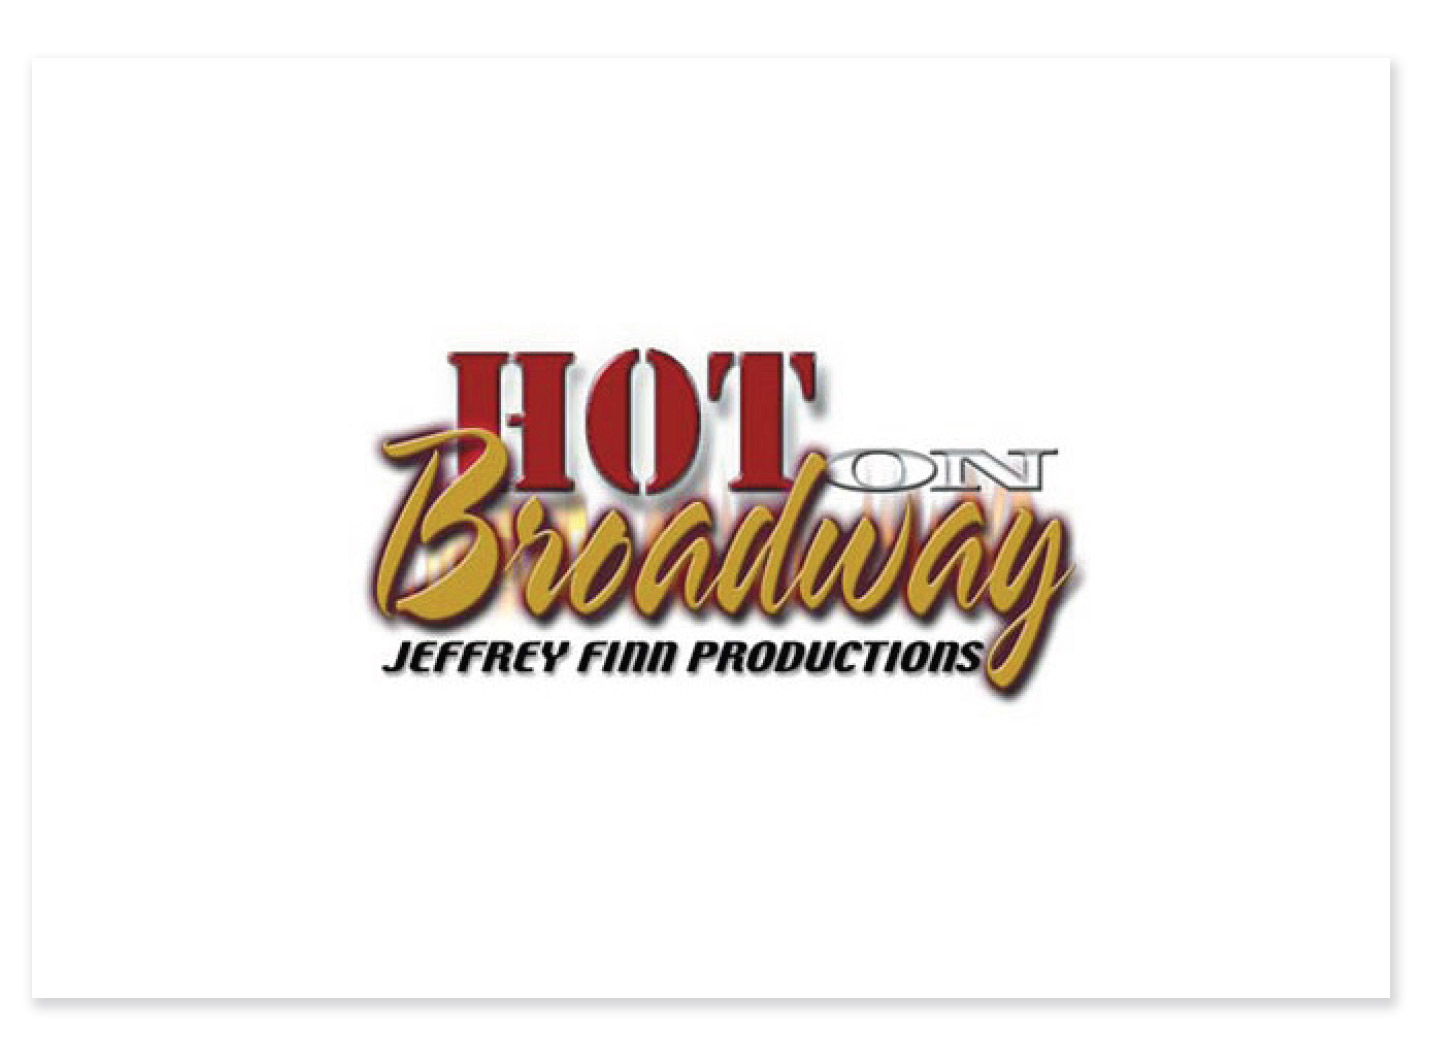 Jeffrey Finn Productions Hot on Broadway Logo